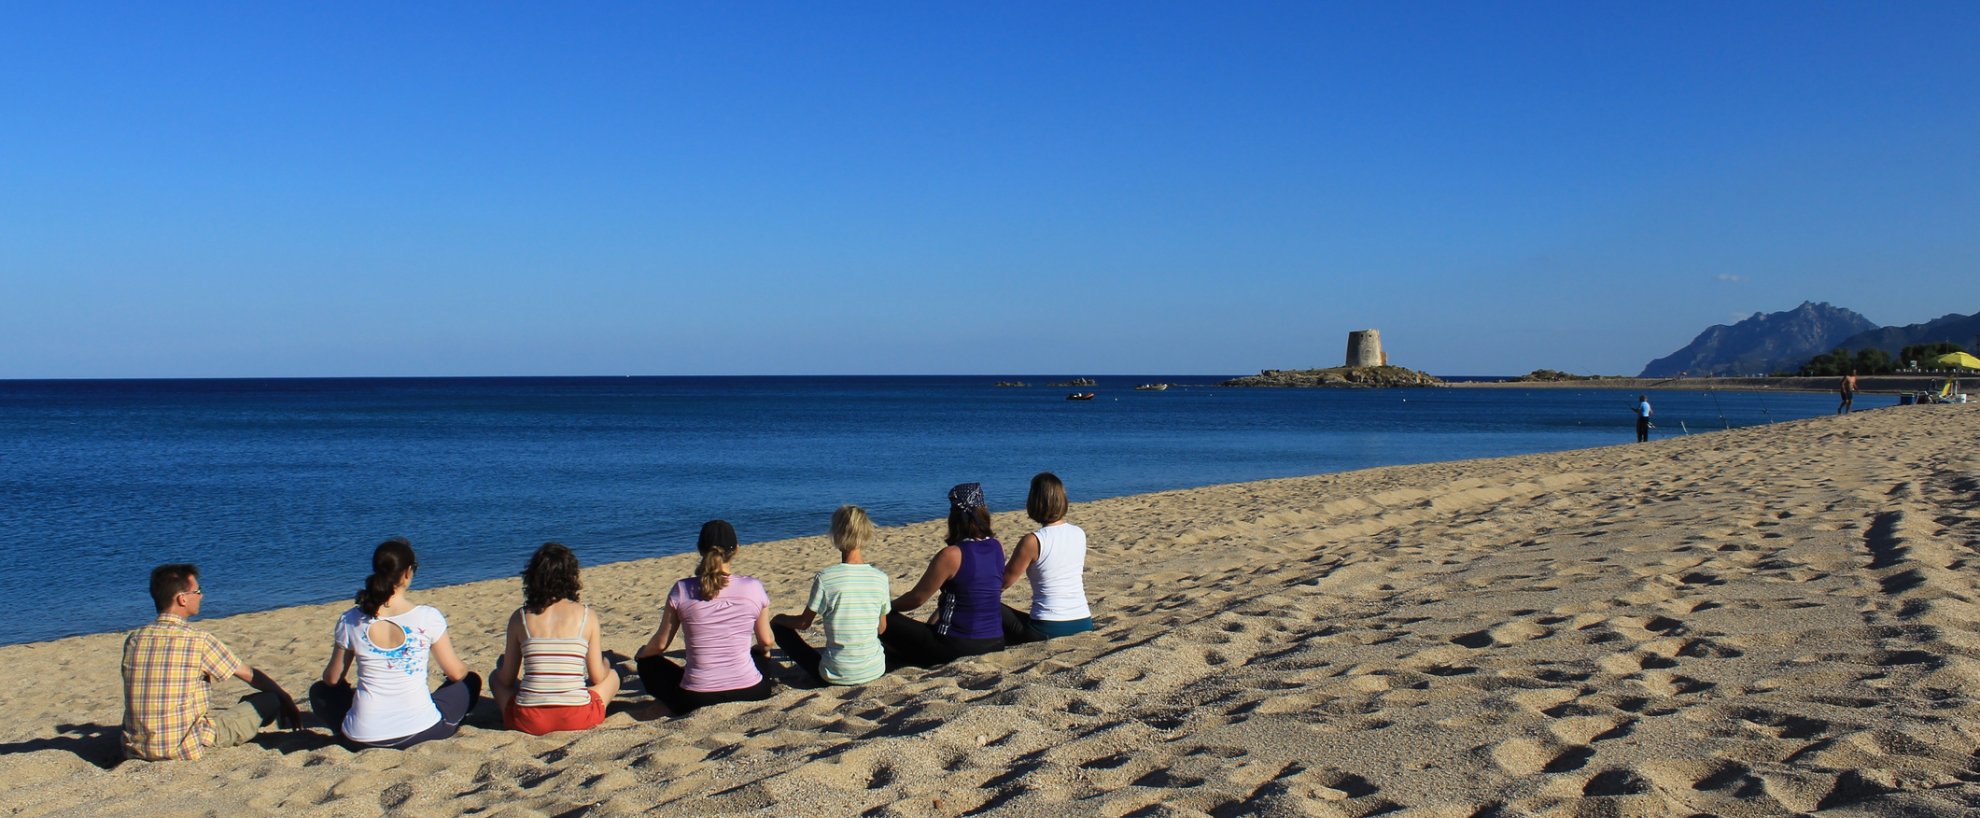 Sardinien Yogagruppe Strand